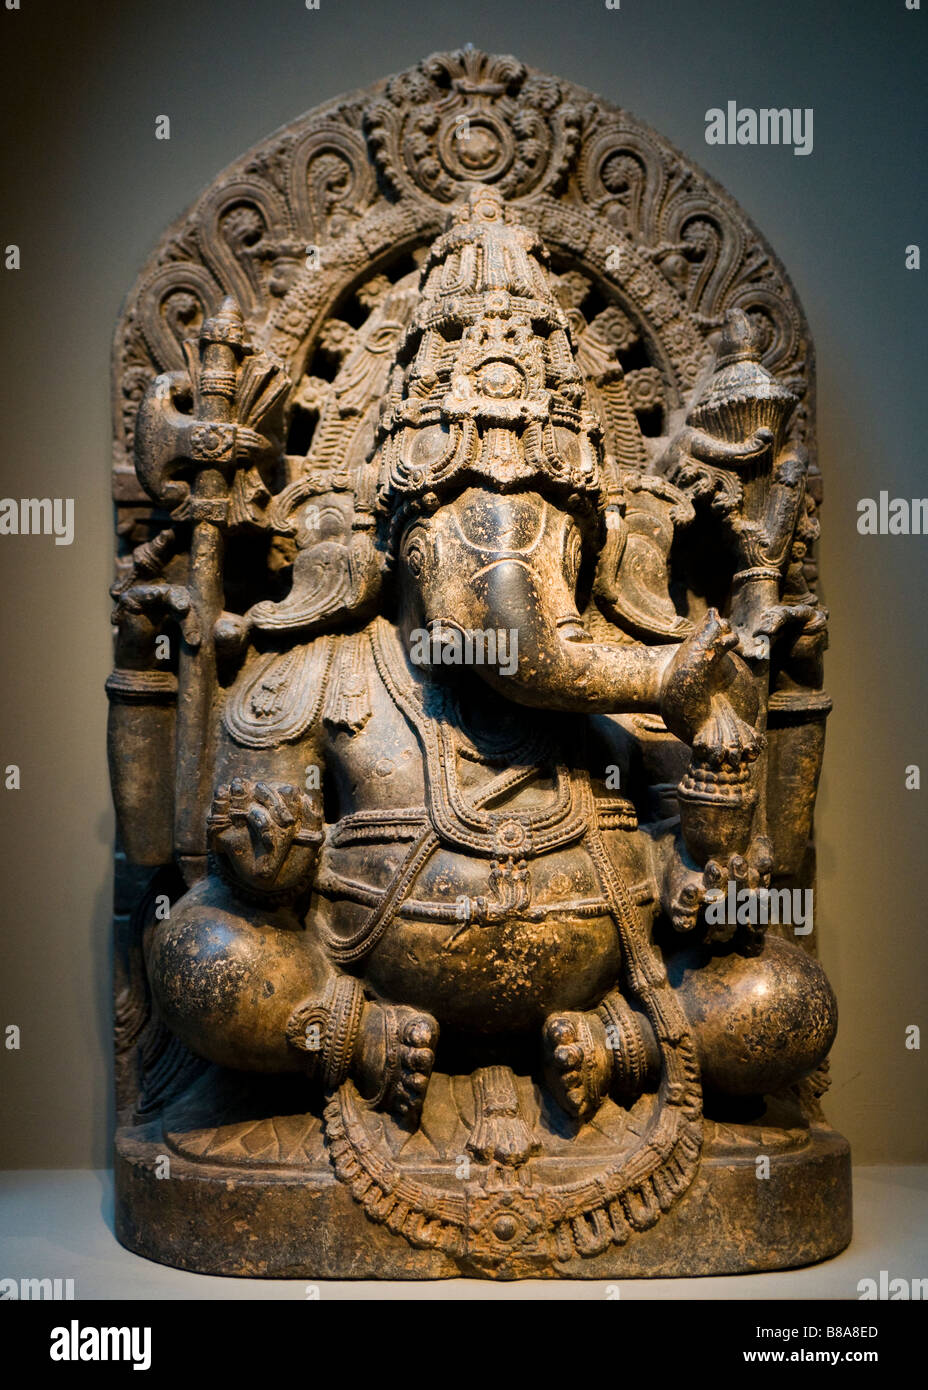 Ganesha The Elephant god sculpture Stock Photo